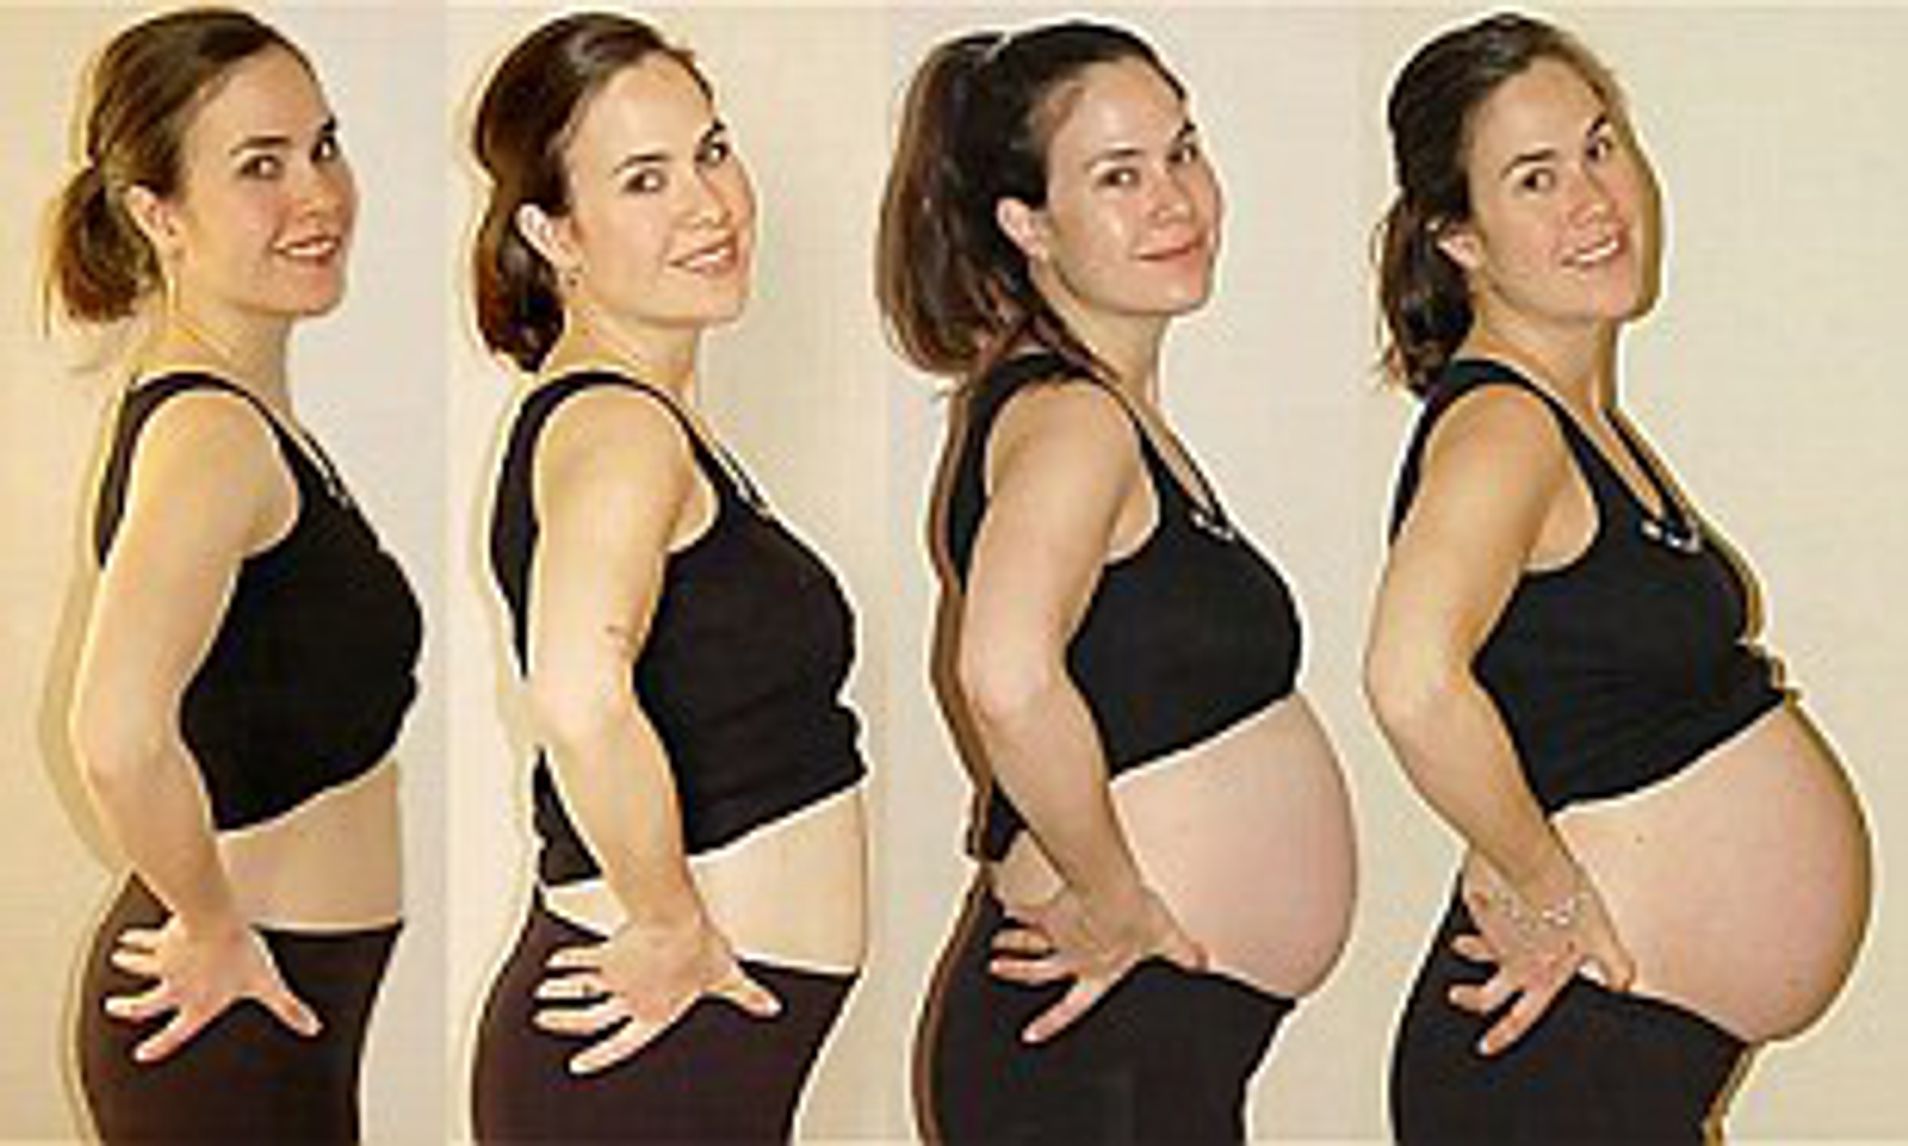 dana lavin share nude pregnancy time lapse photos